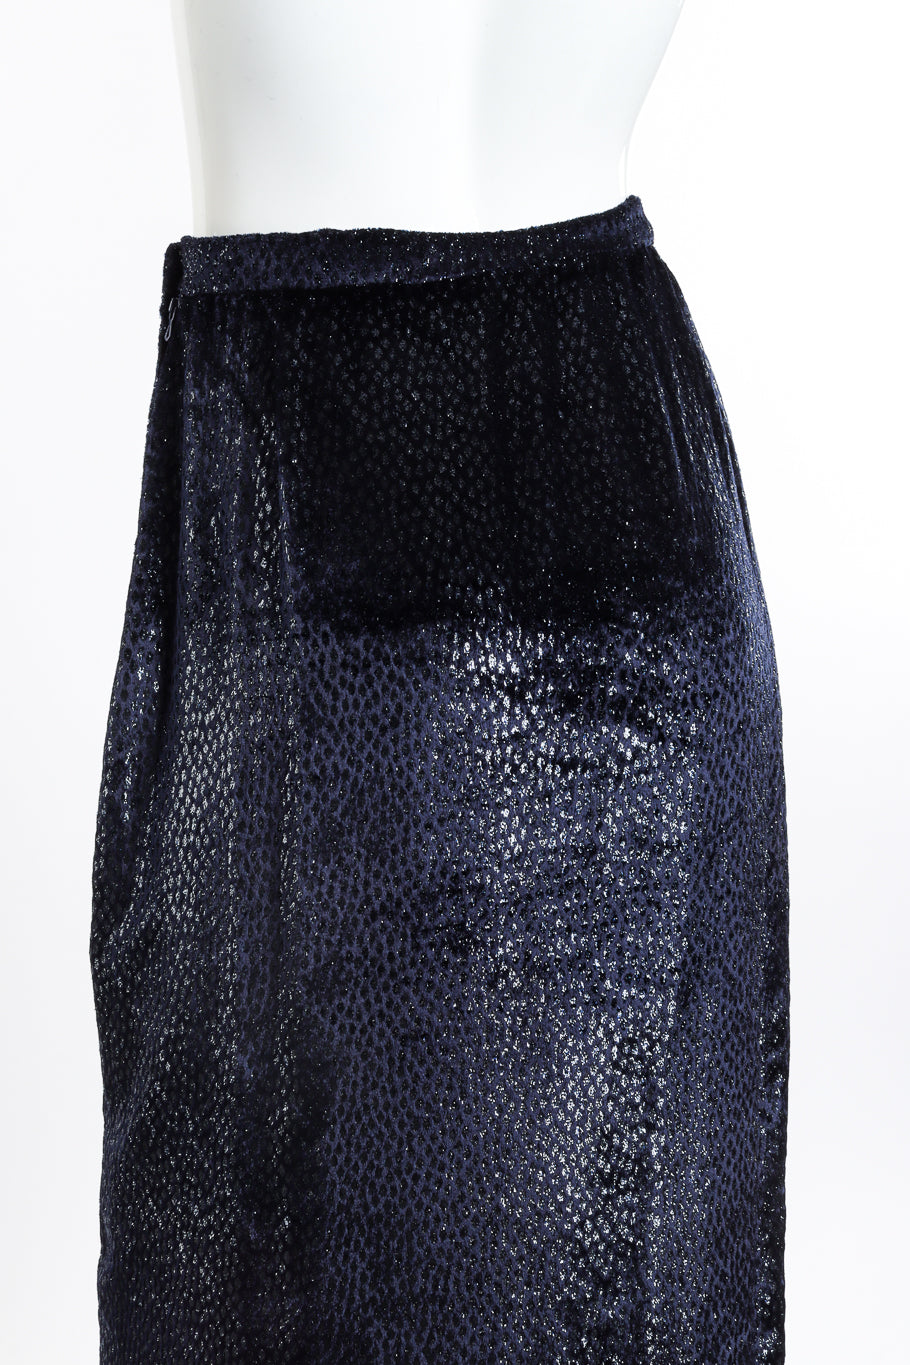 Vicky Tiel Metallic Silk Velvet Skirt back on mannequin closeup @recessla